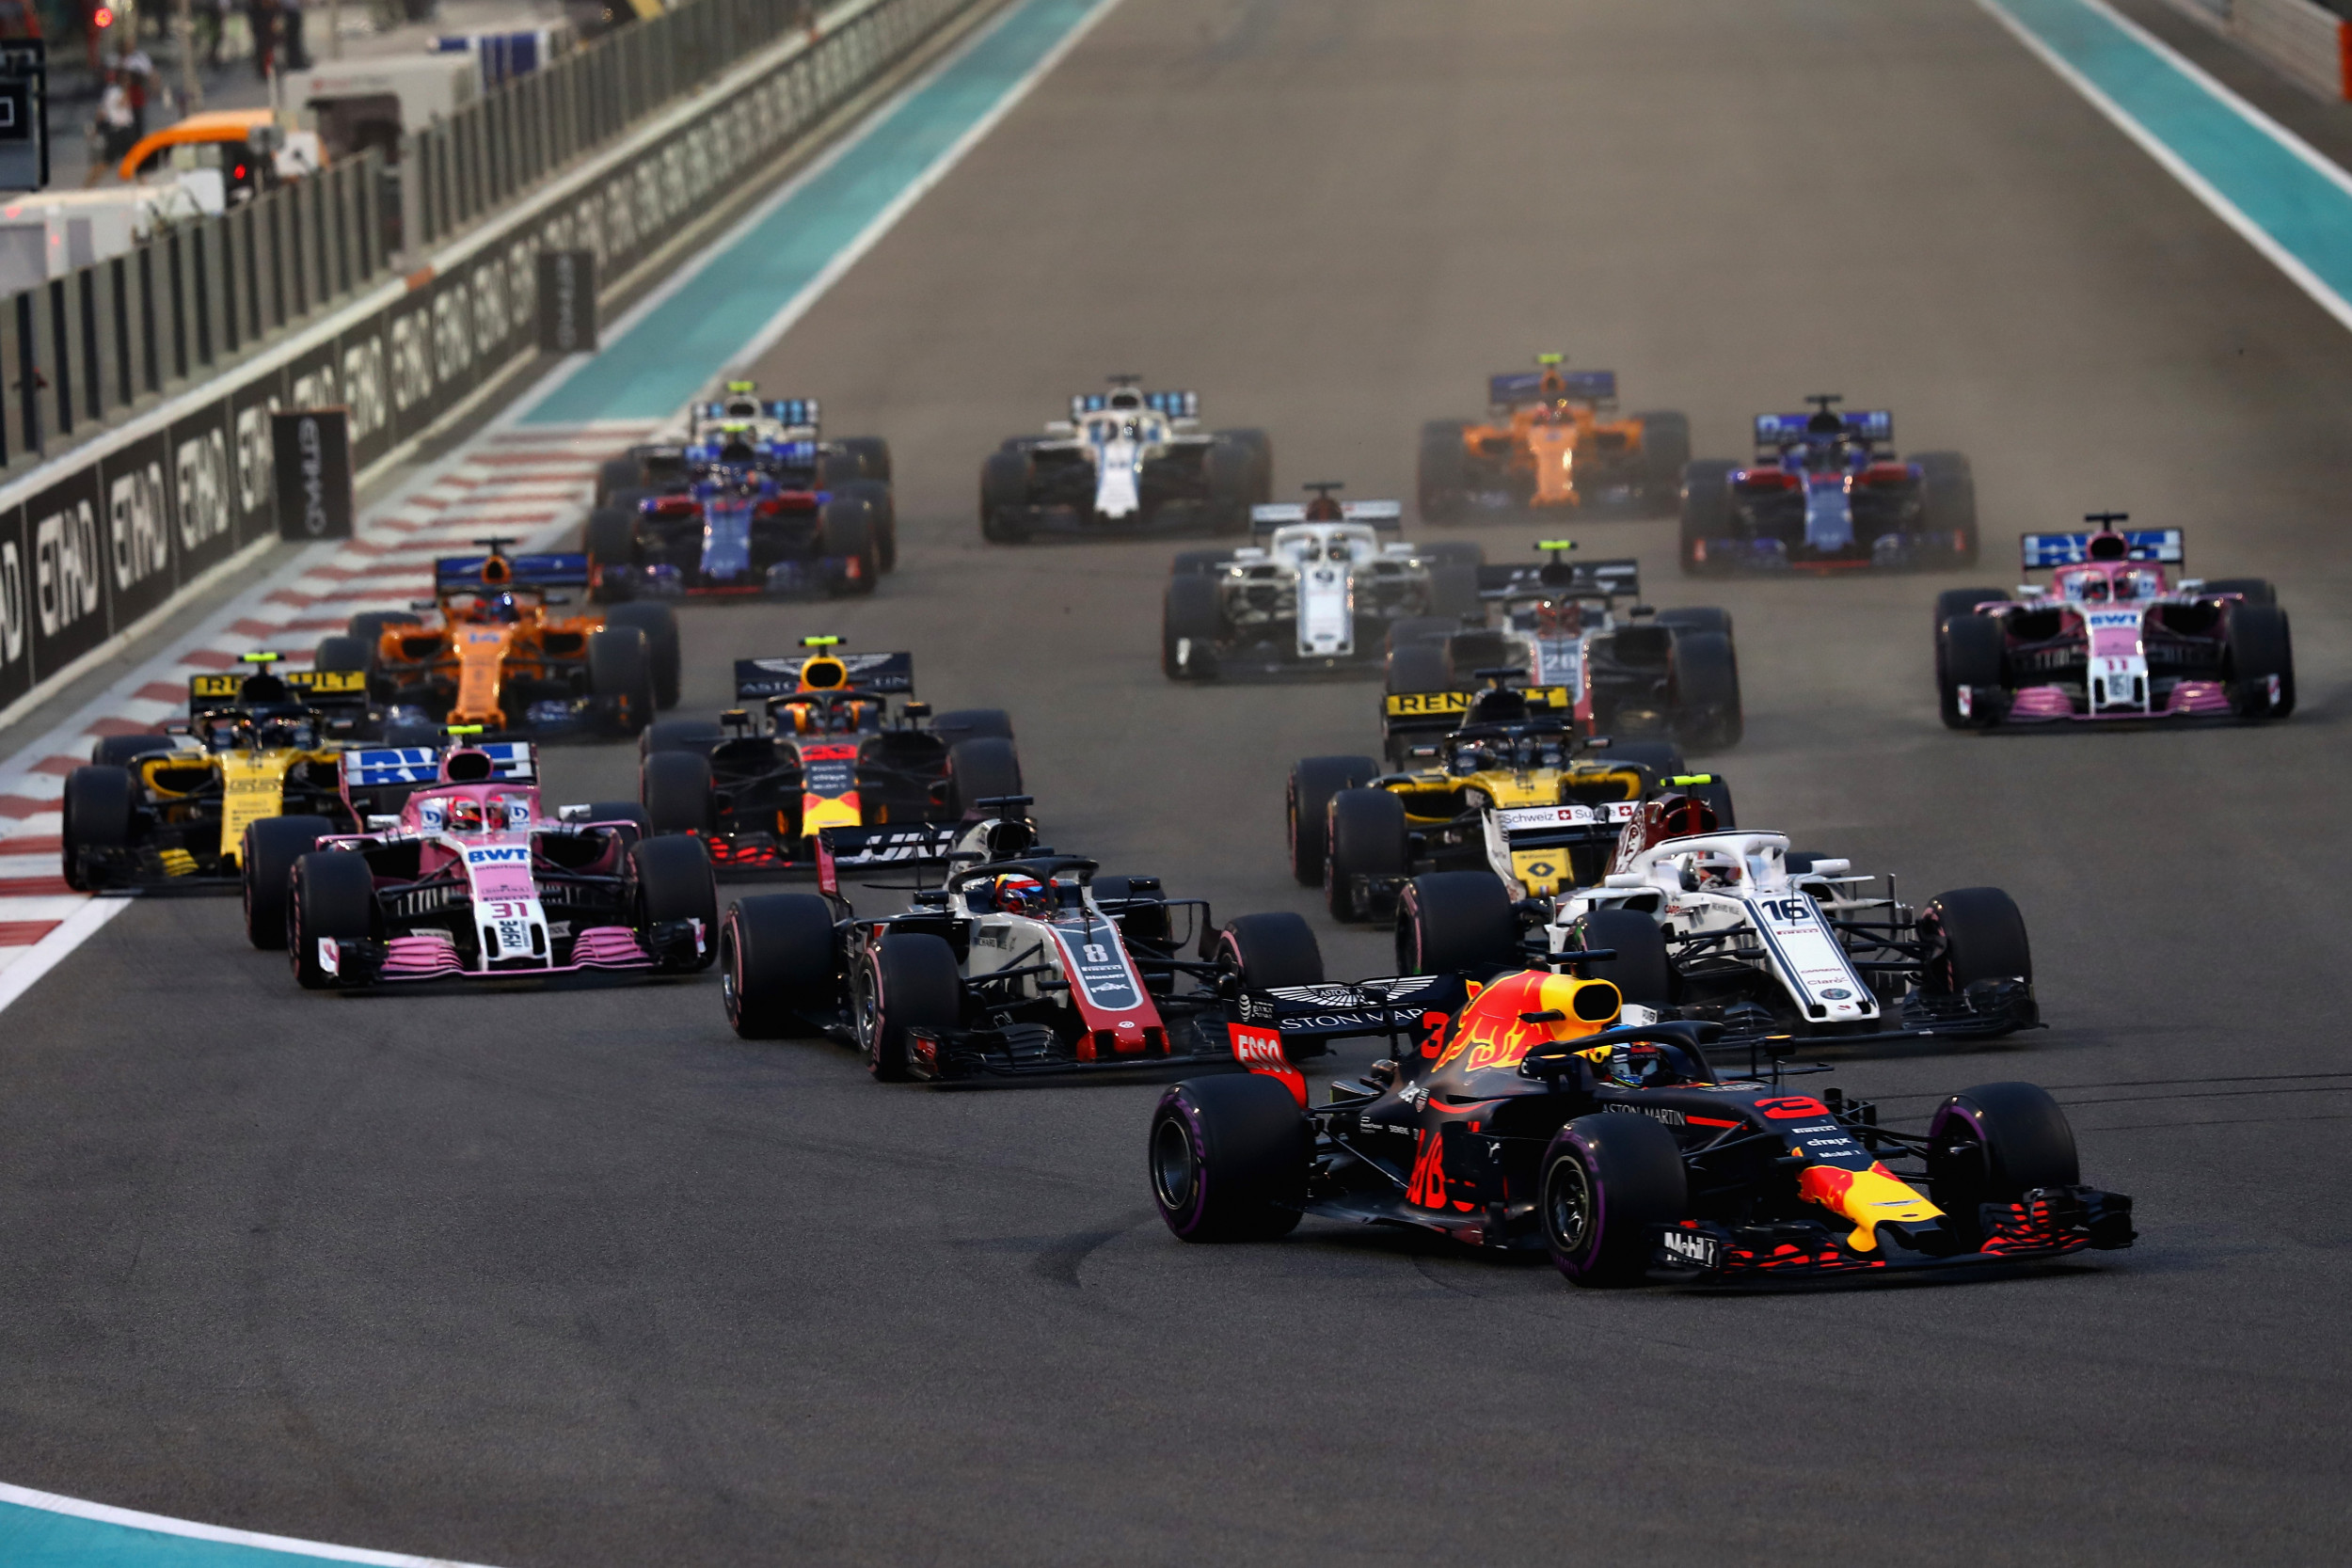 Abu Dhabi Grand Prix 2021: Race Time & to